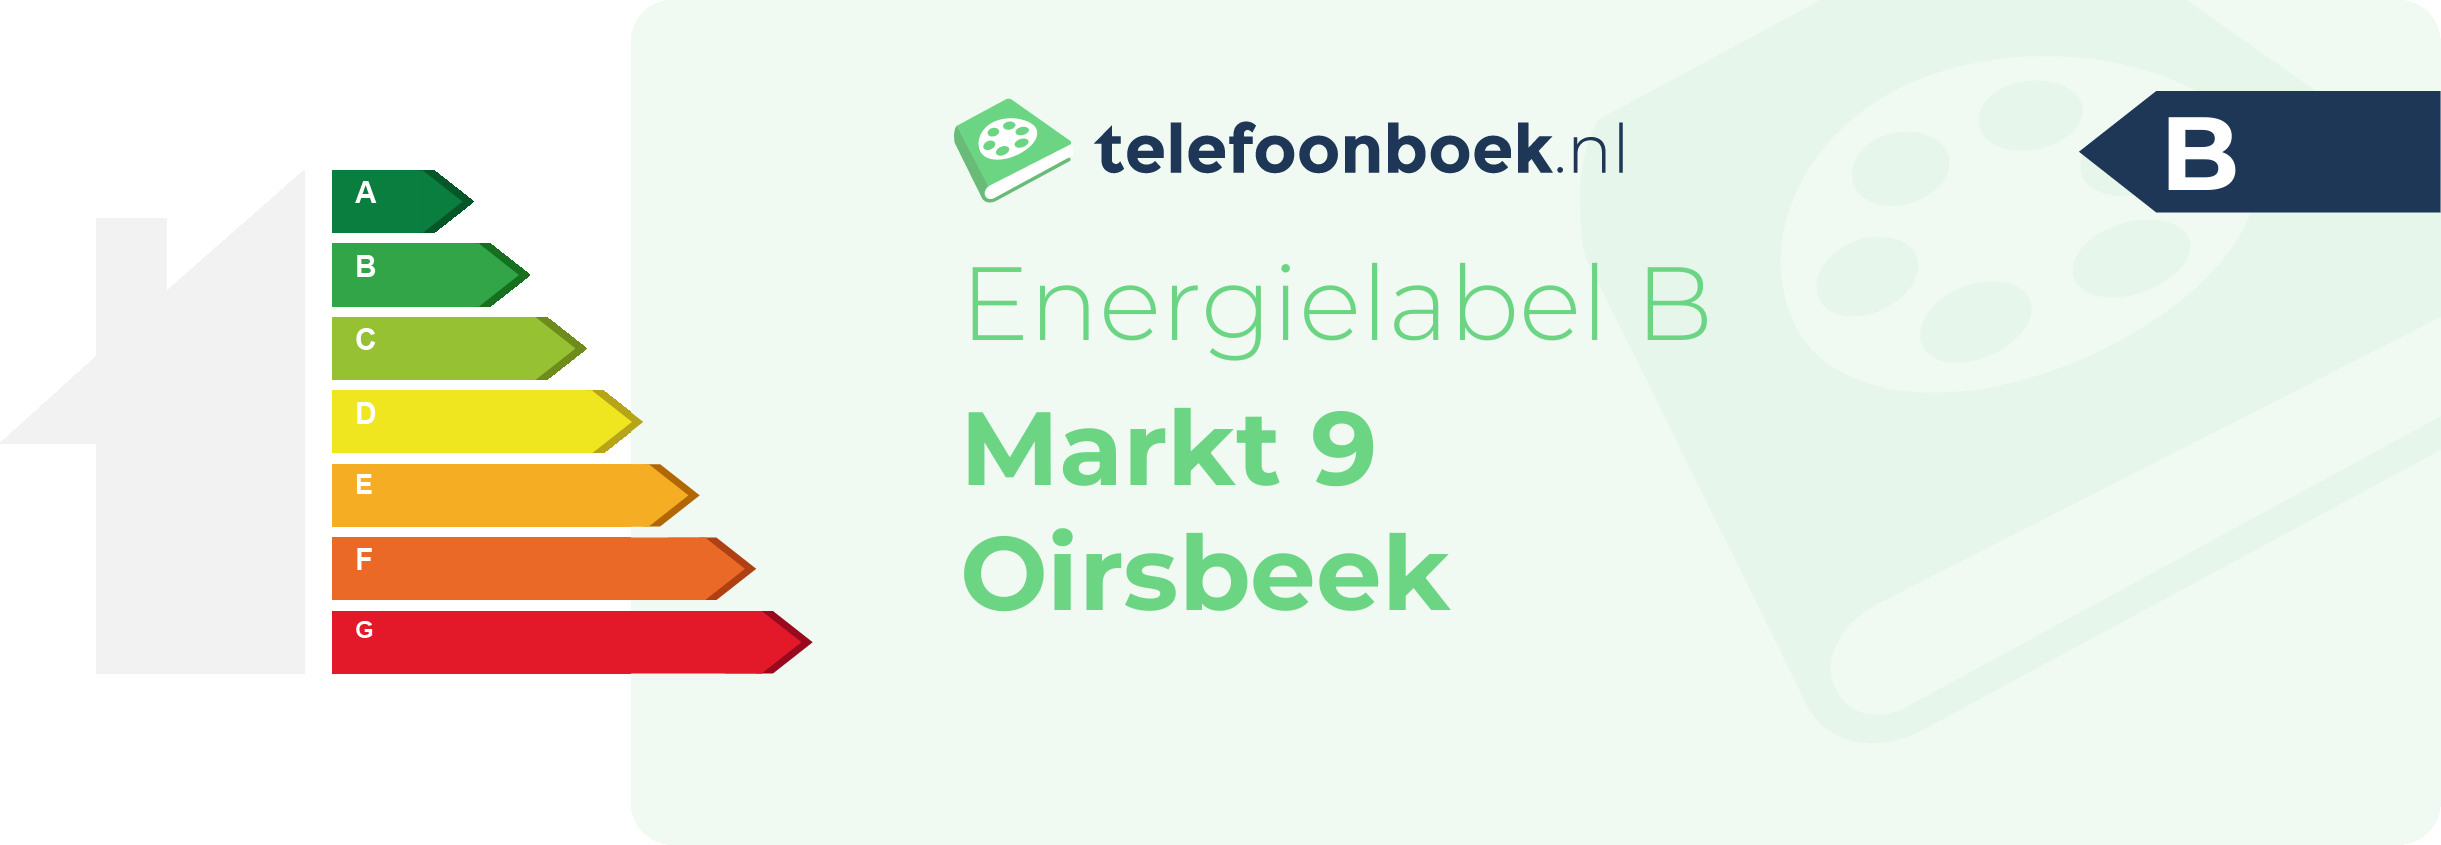 Energielabel Markt 9 Oirsbeek